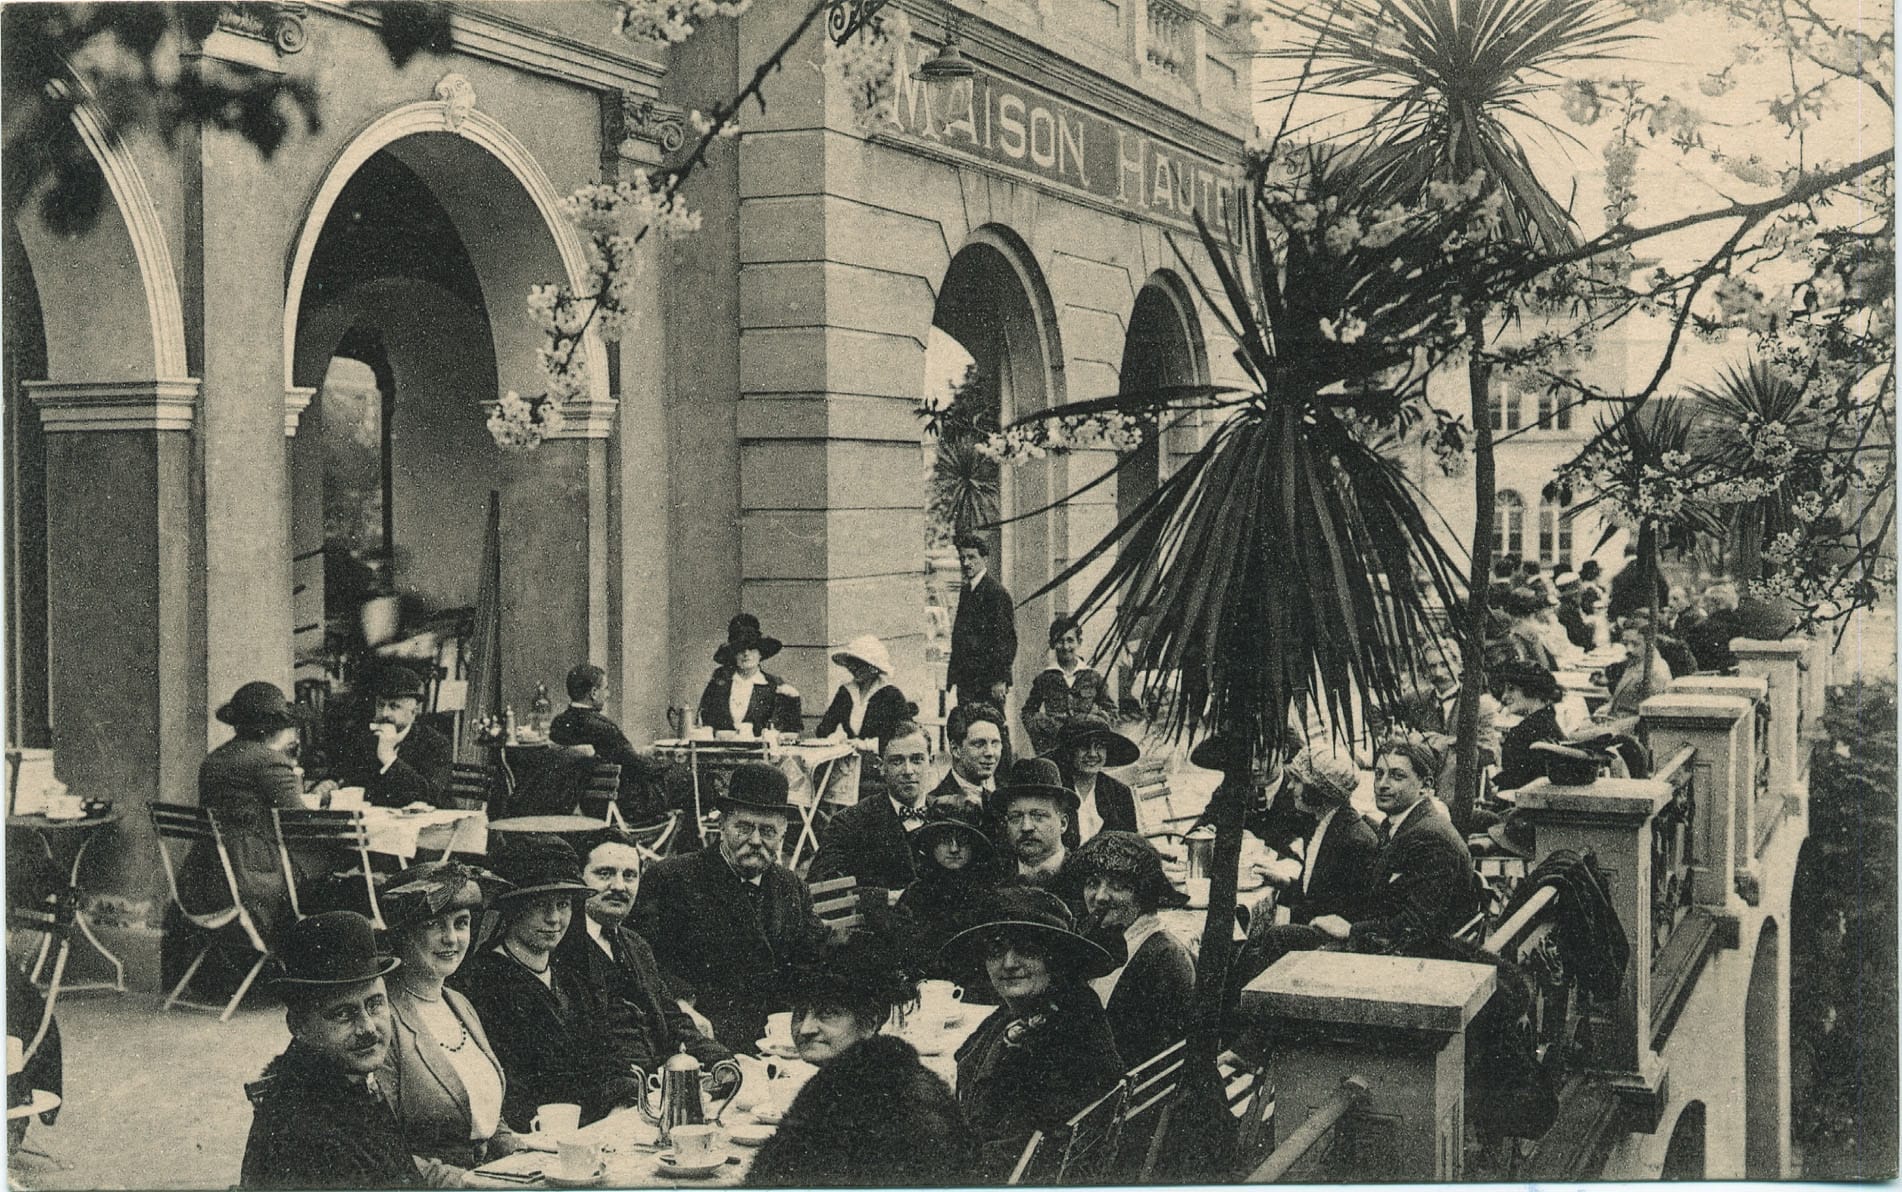 Hôtel de la Maison haute - Terrasse et galerie, CP Ed. Albert Ph. Belge Lumière, vers 1910